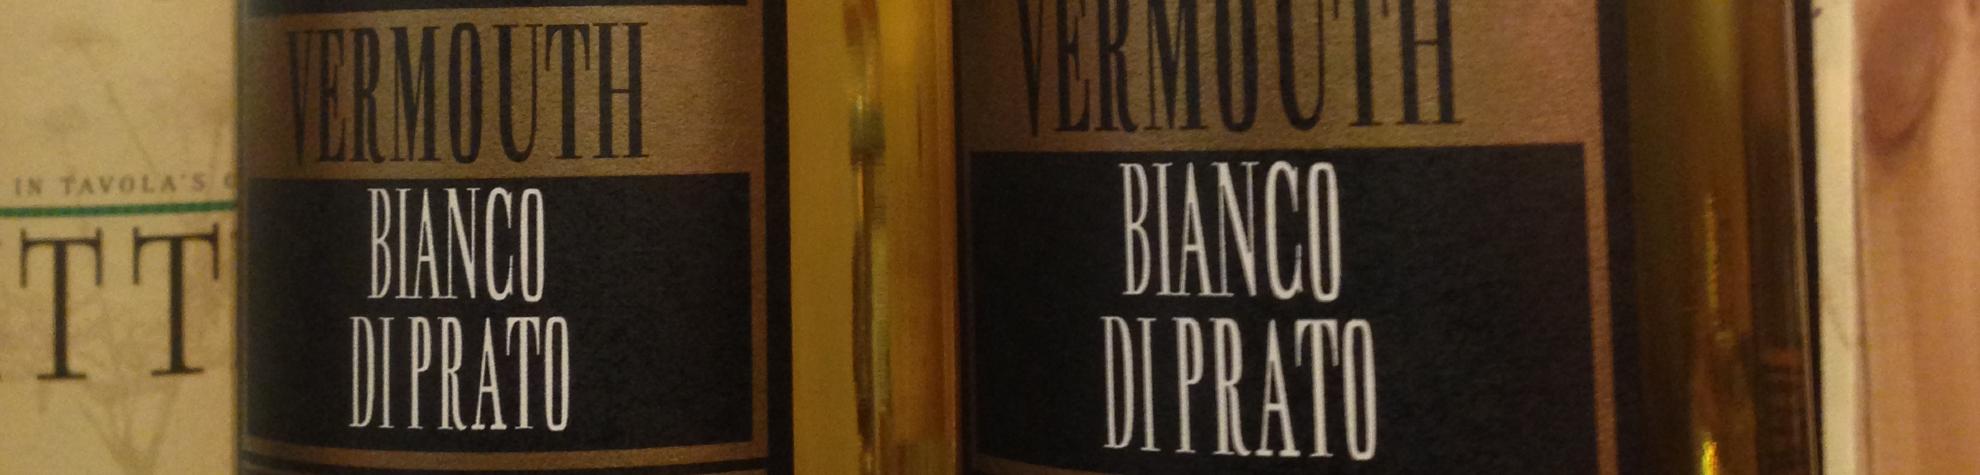 vermouth-bianco-prato